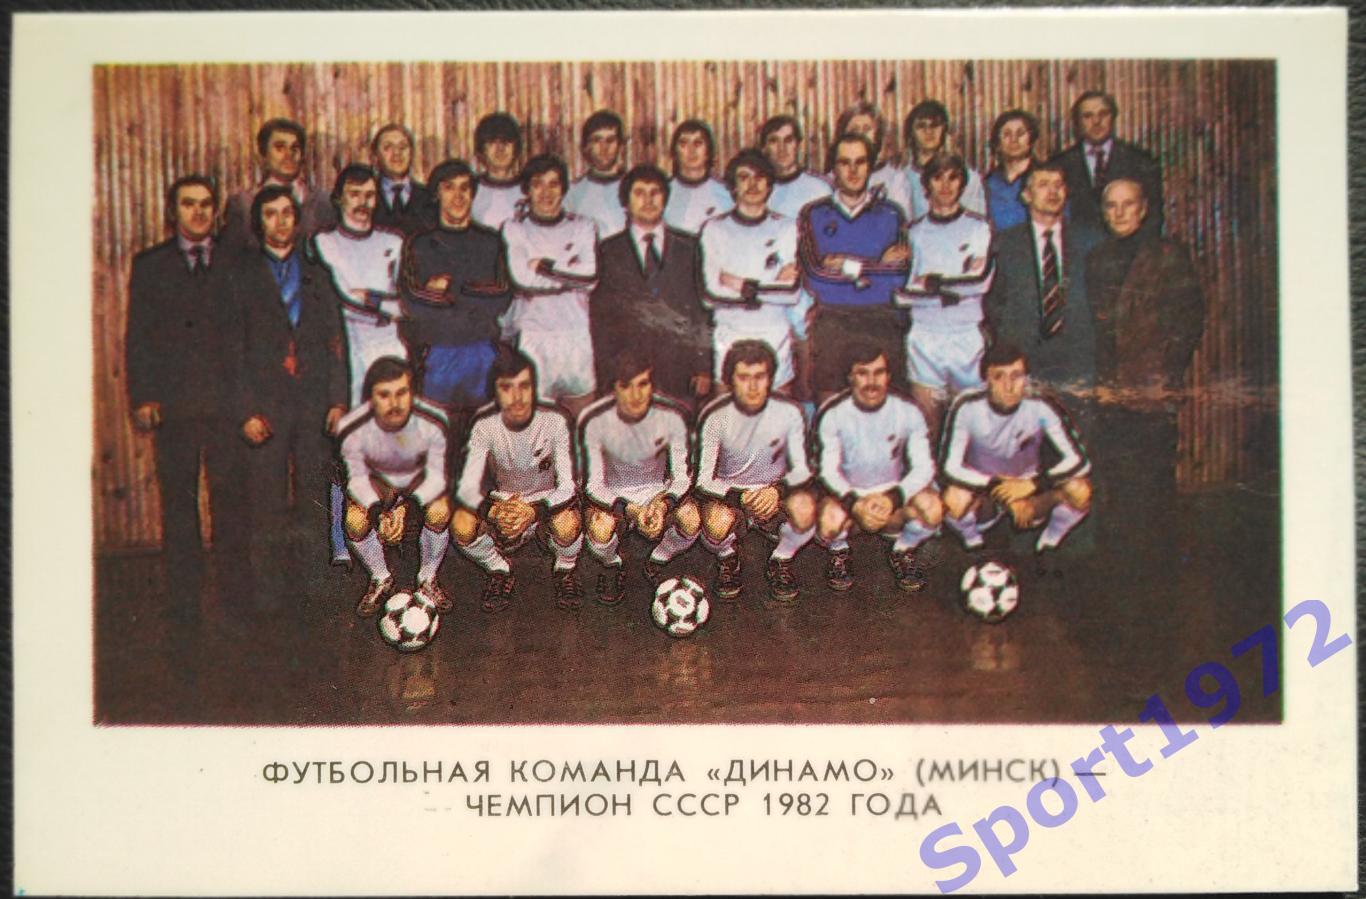 Динамо Минск - чемпион СССР 1982 года.